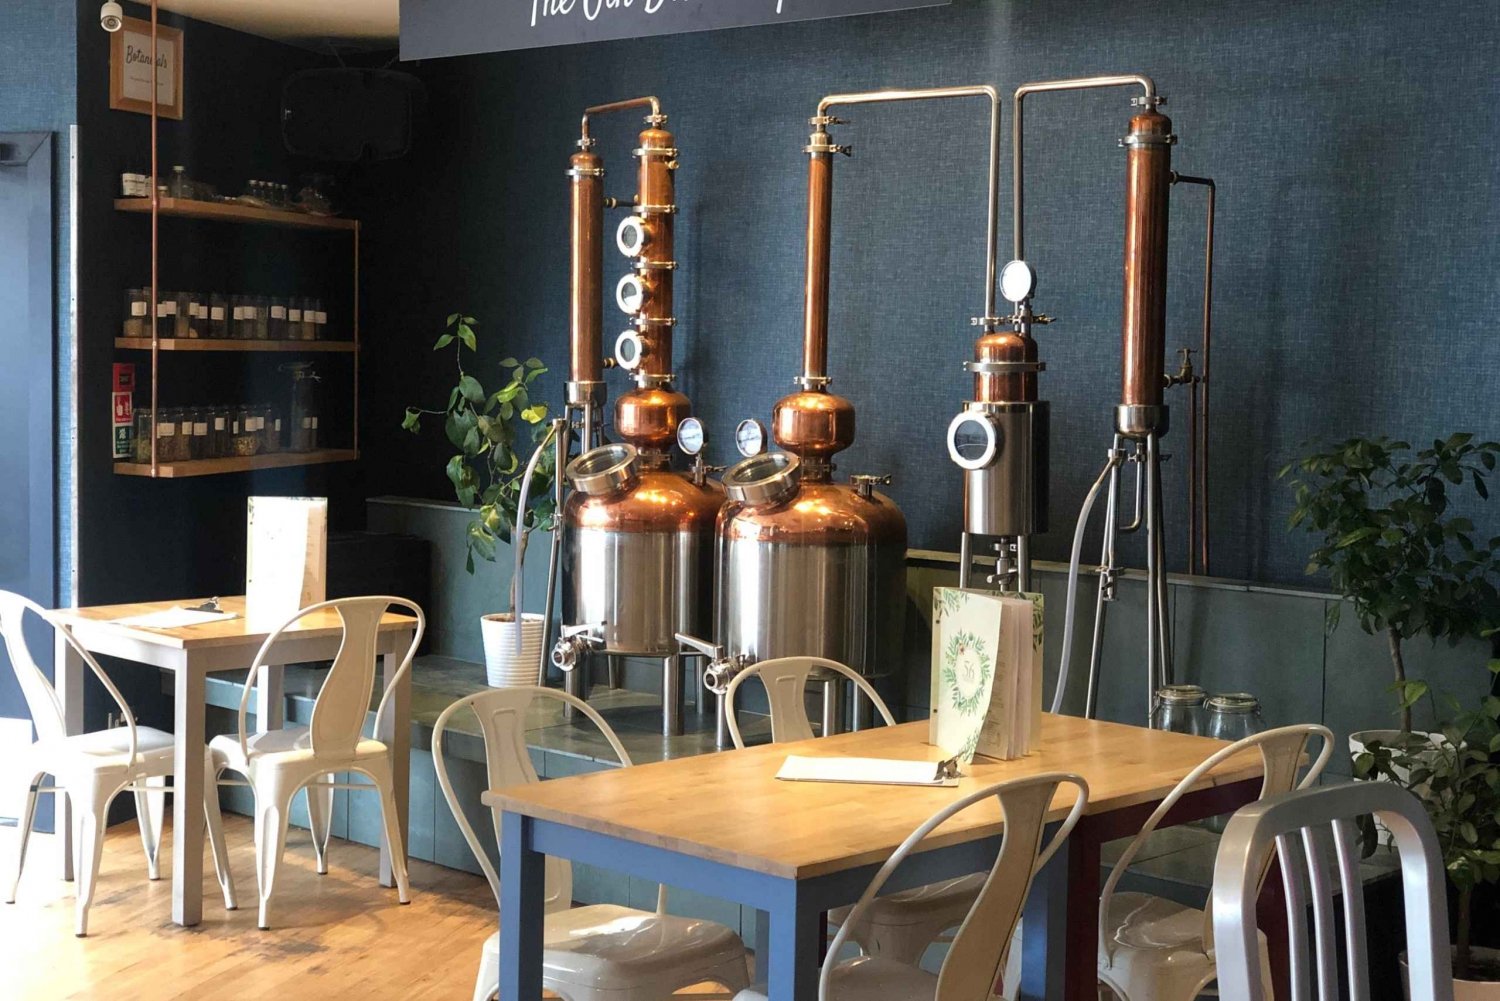 Edinburgh: Guidet ginsmaking på 56 North Distillery